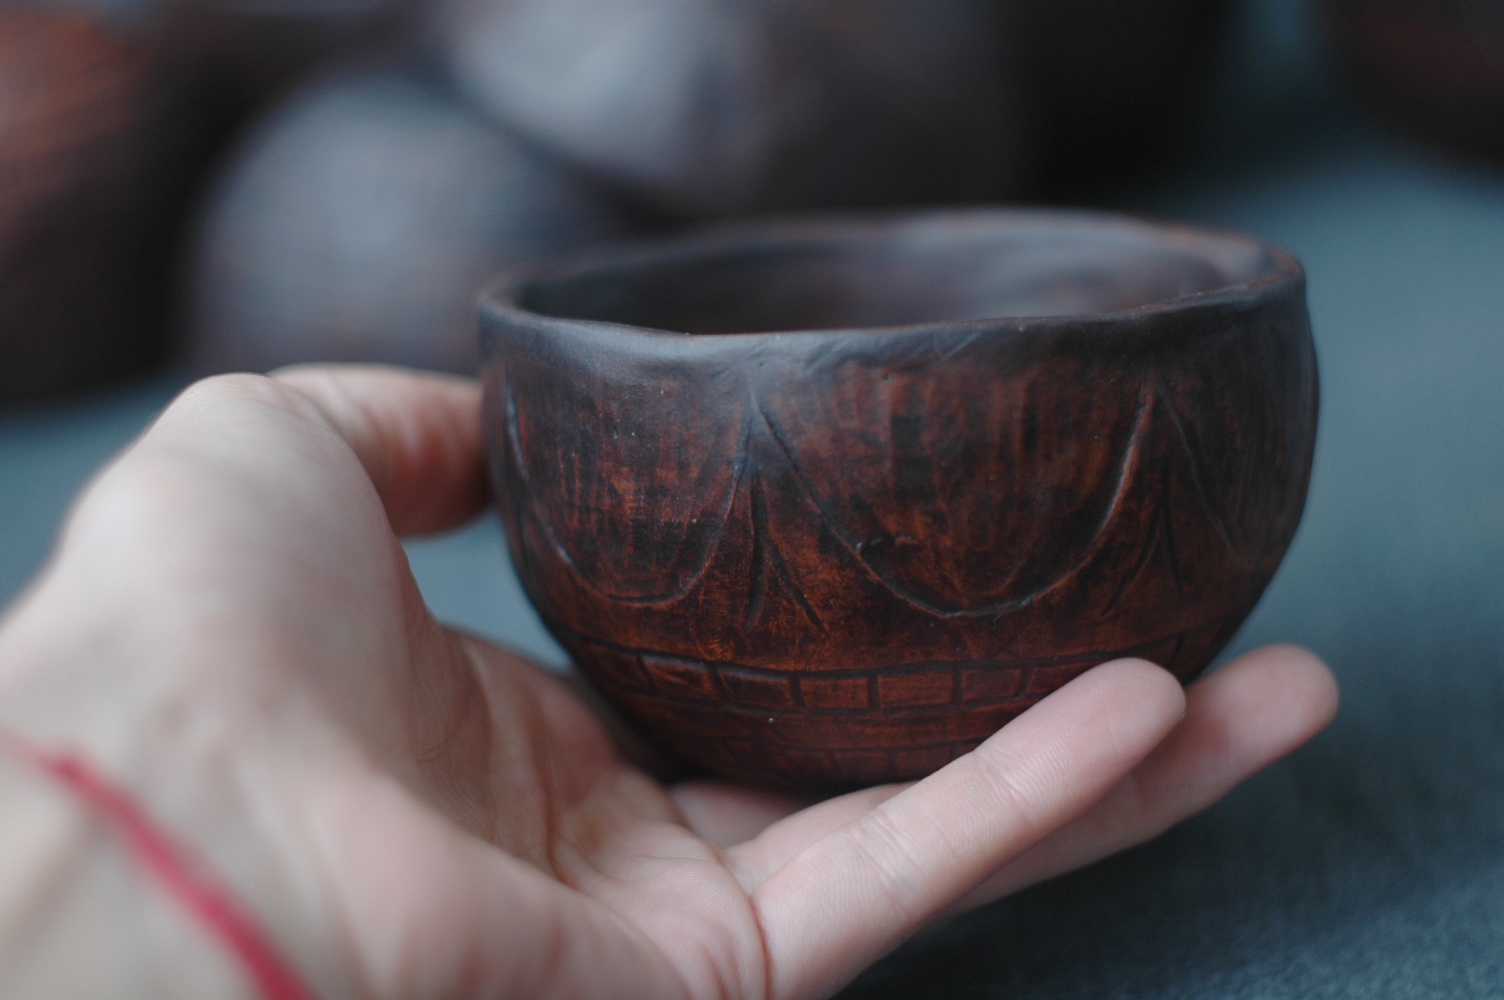 Pottery ceramic bowl “Sun”